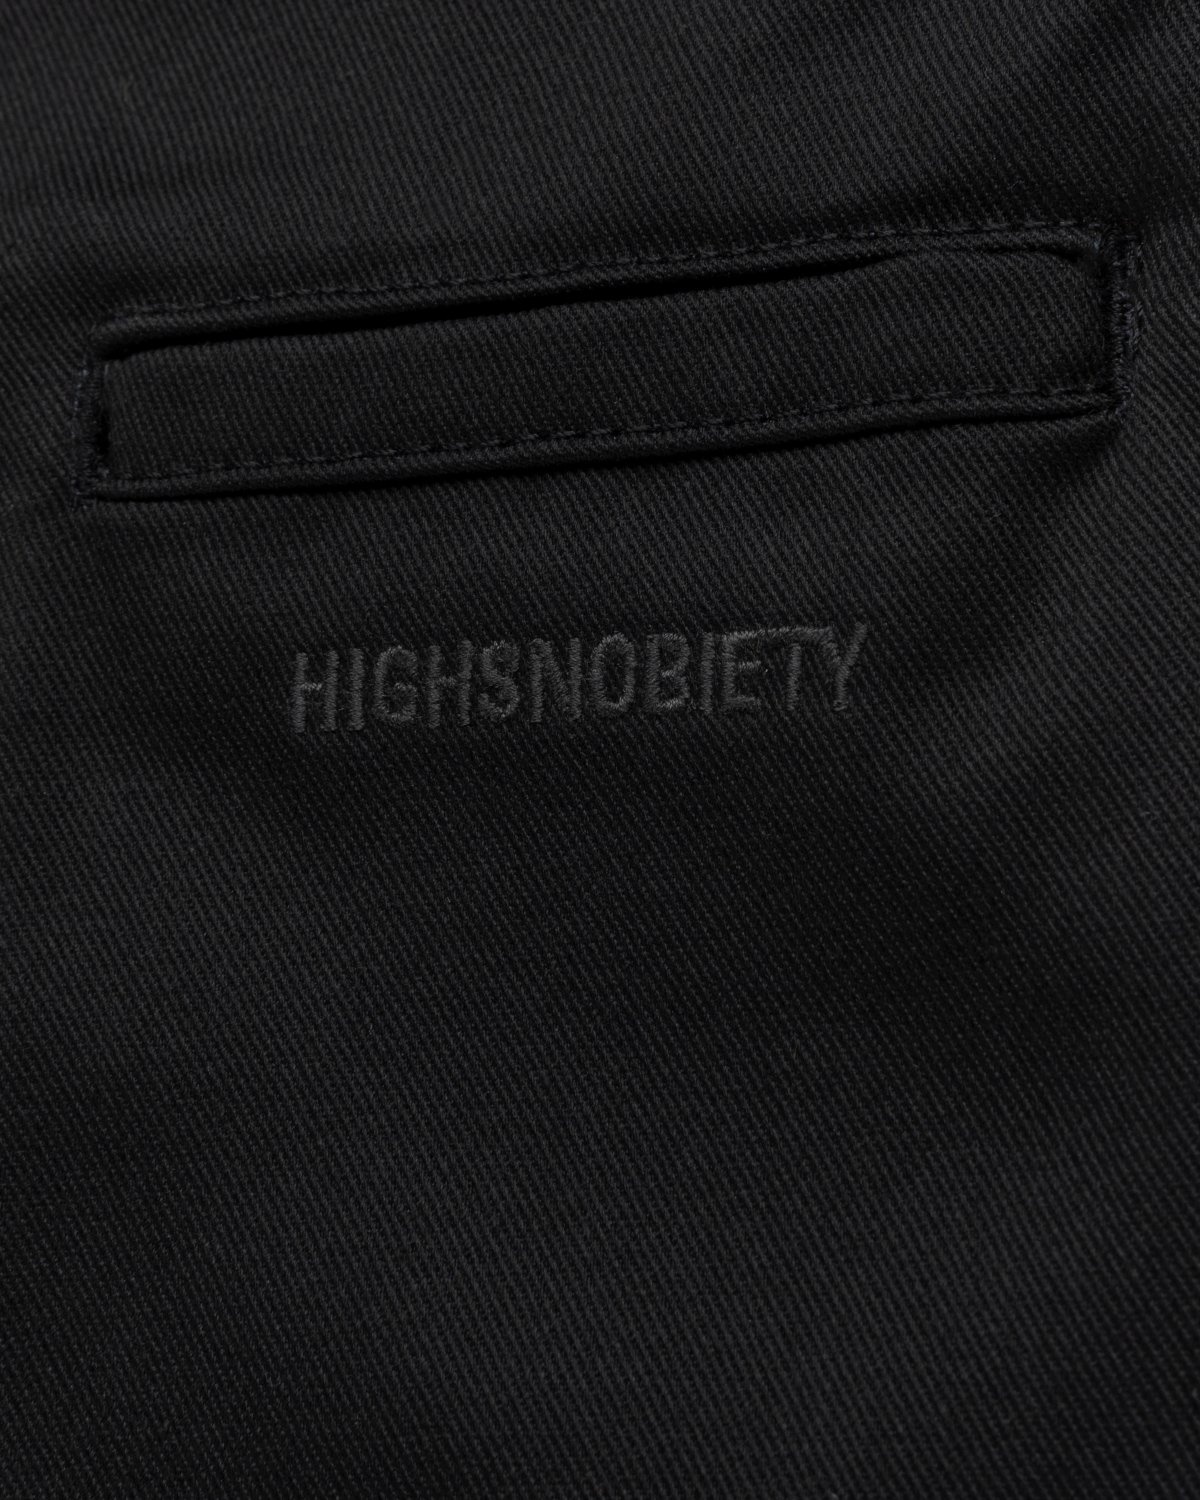 Highsnobiety x Dickies – Pleated Work Pants Black | Highsnobiety Shop